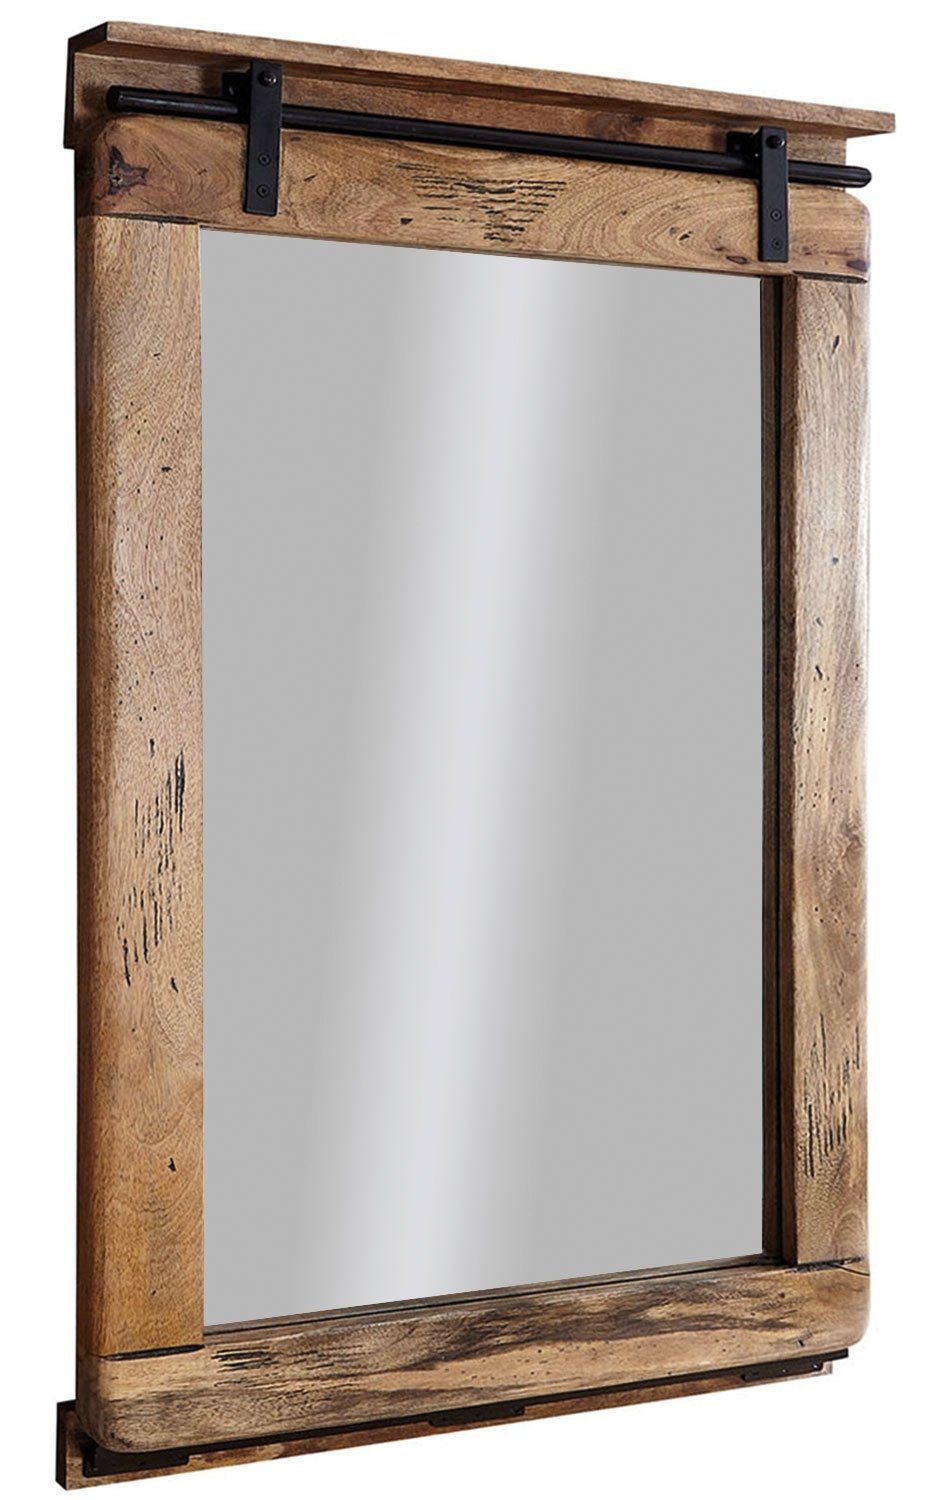 B Mangoholz massiv, 110 aus Badspiegel Möbelvertriebs G+K 65 x Gusseisen cm, H Applikationen BOLDAN, GmbH